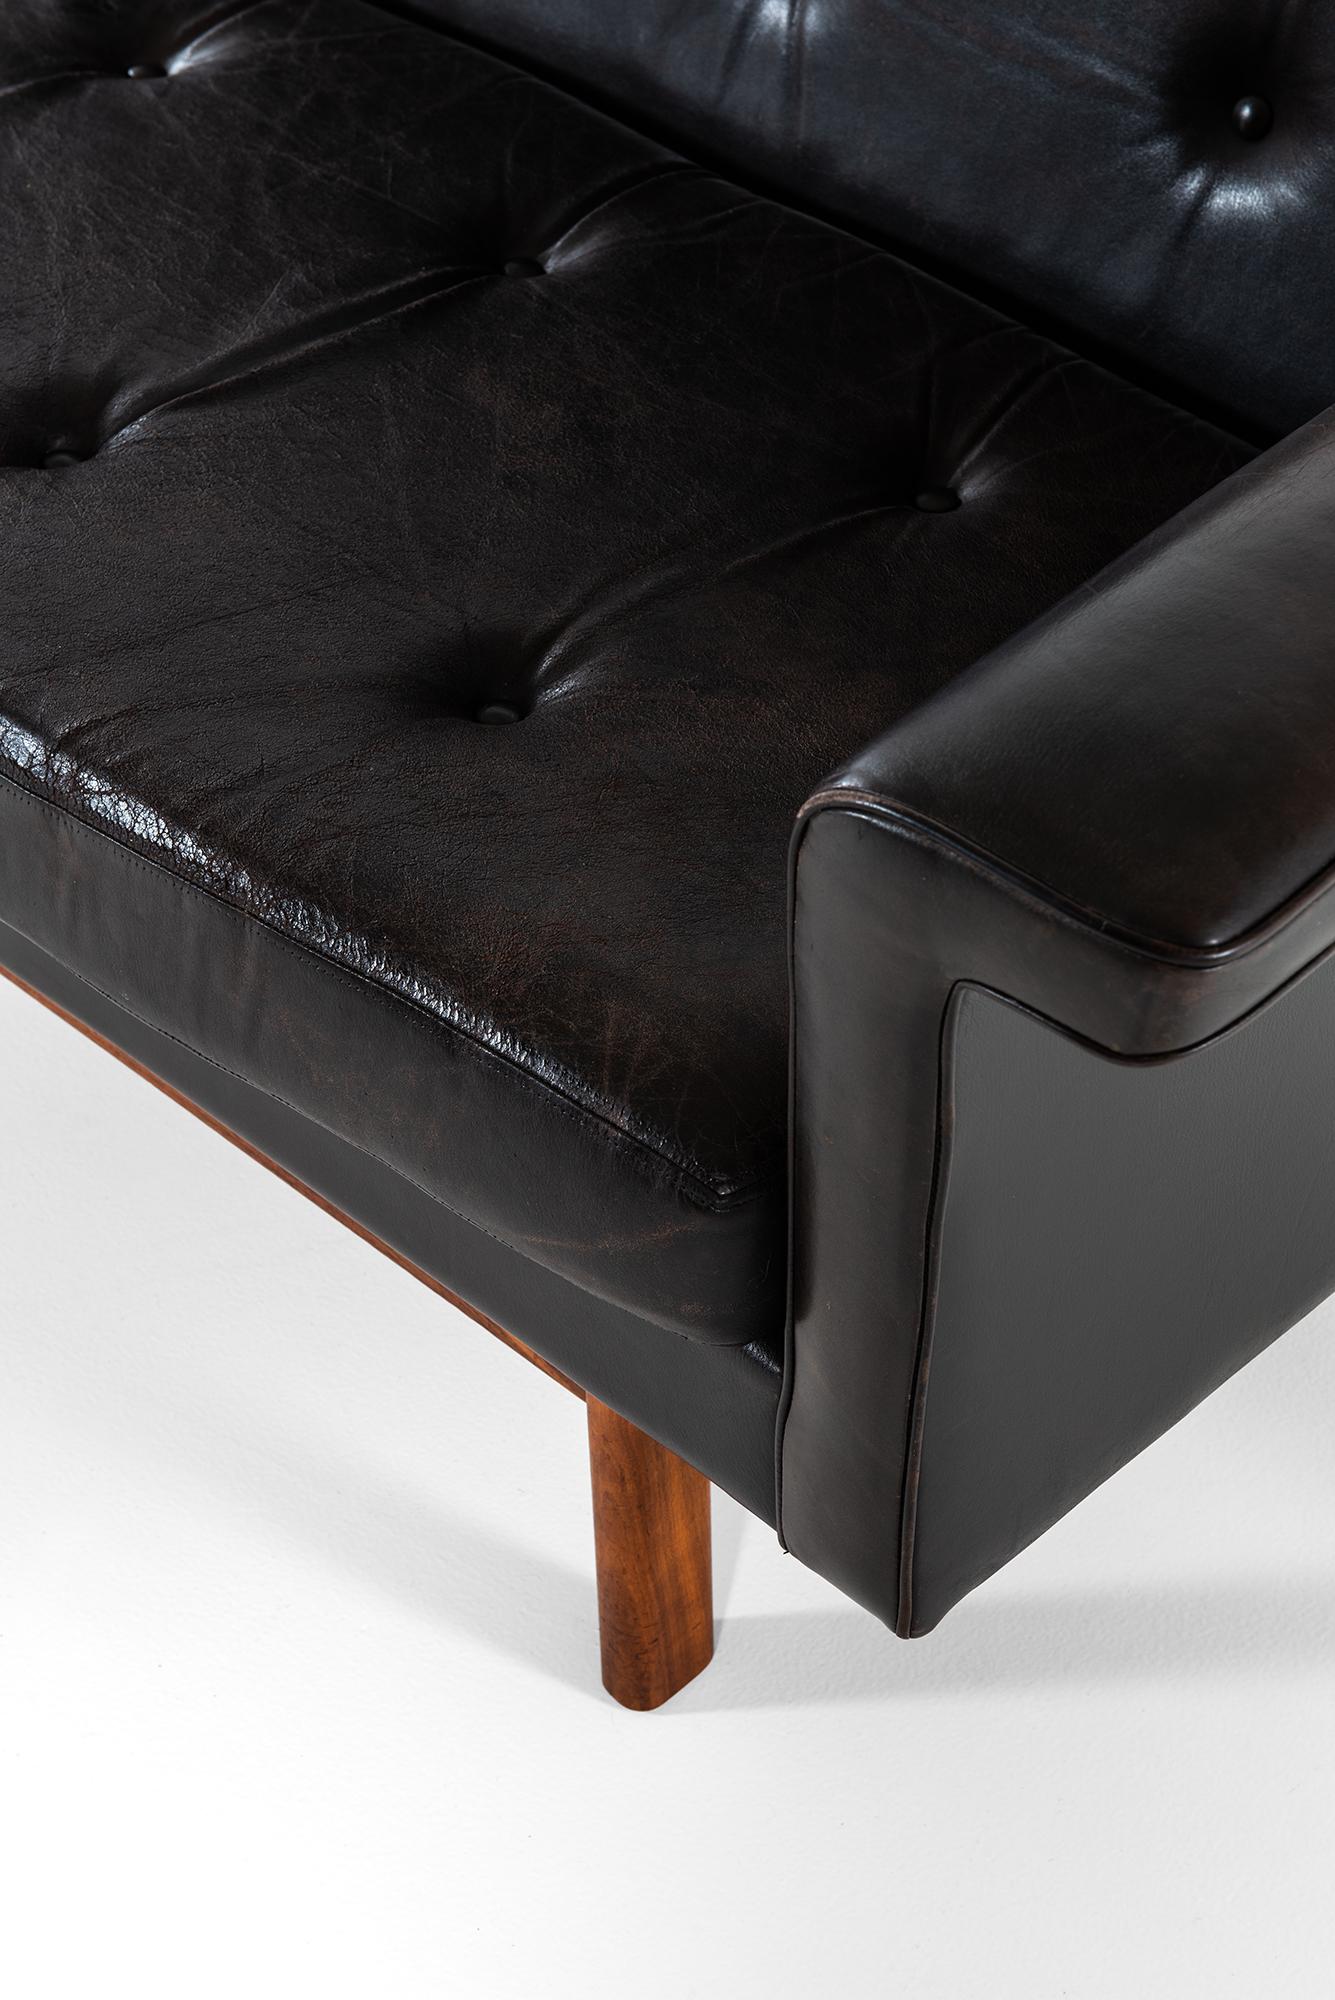 Sofa designed by Karl-Erik Ekselius. Produced by JOC in Vetlanda, Sweden.